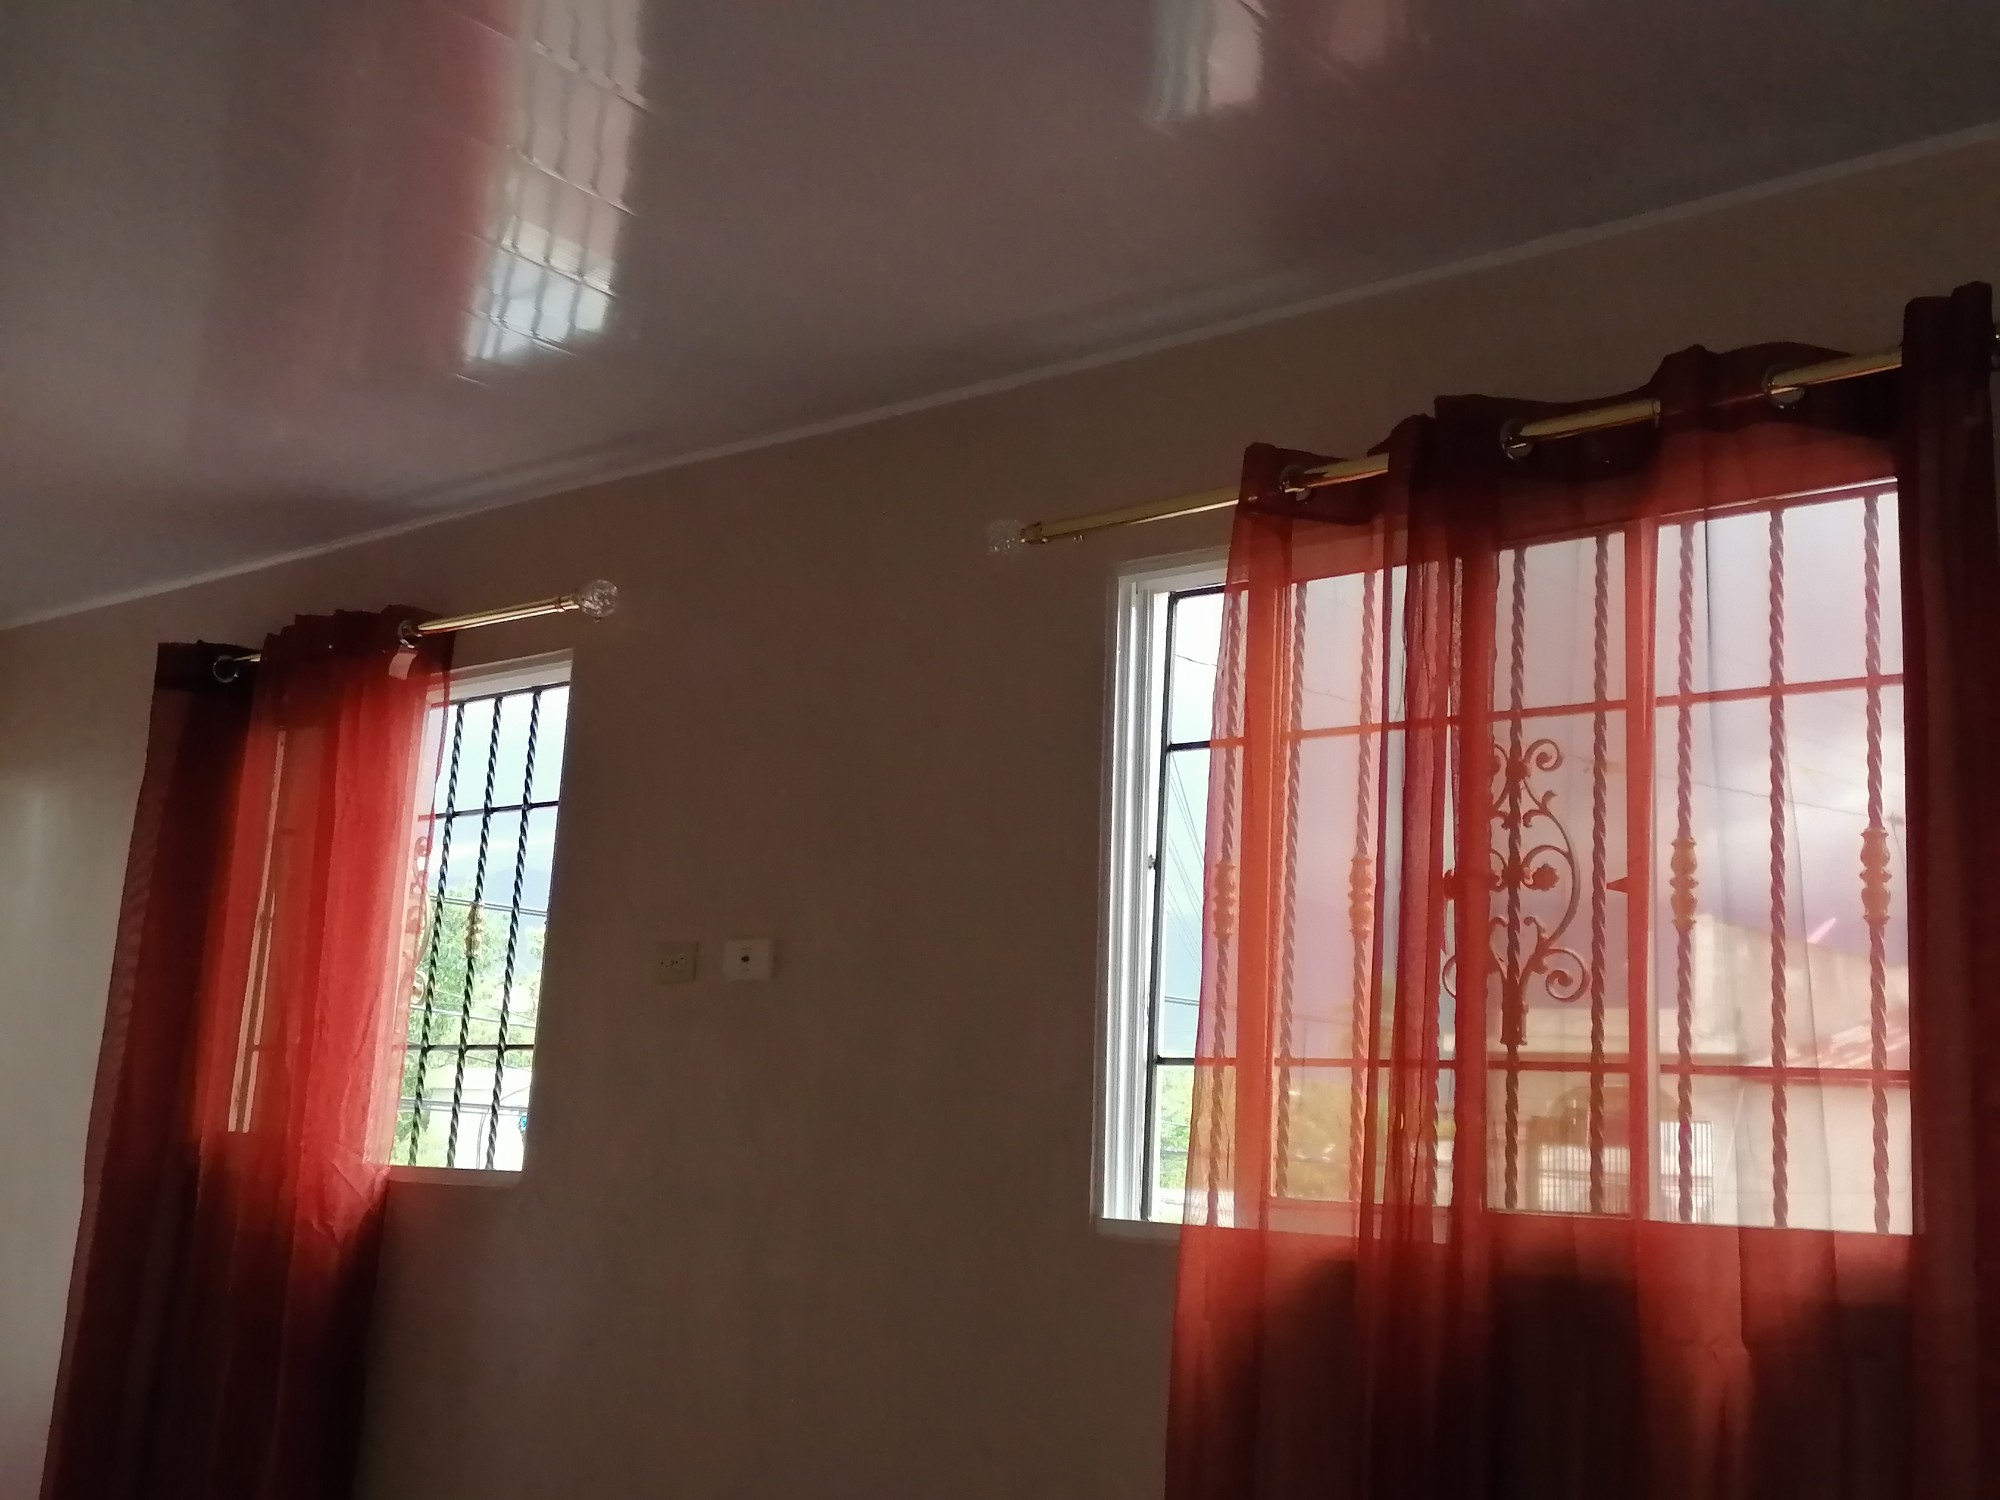  barras de cortinas